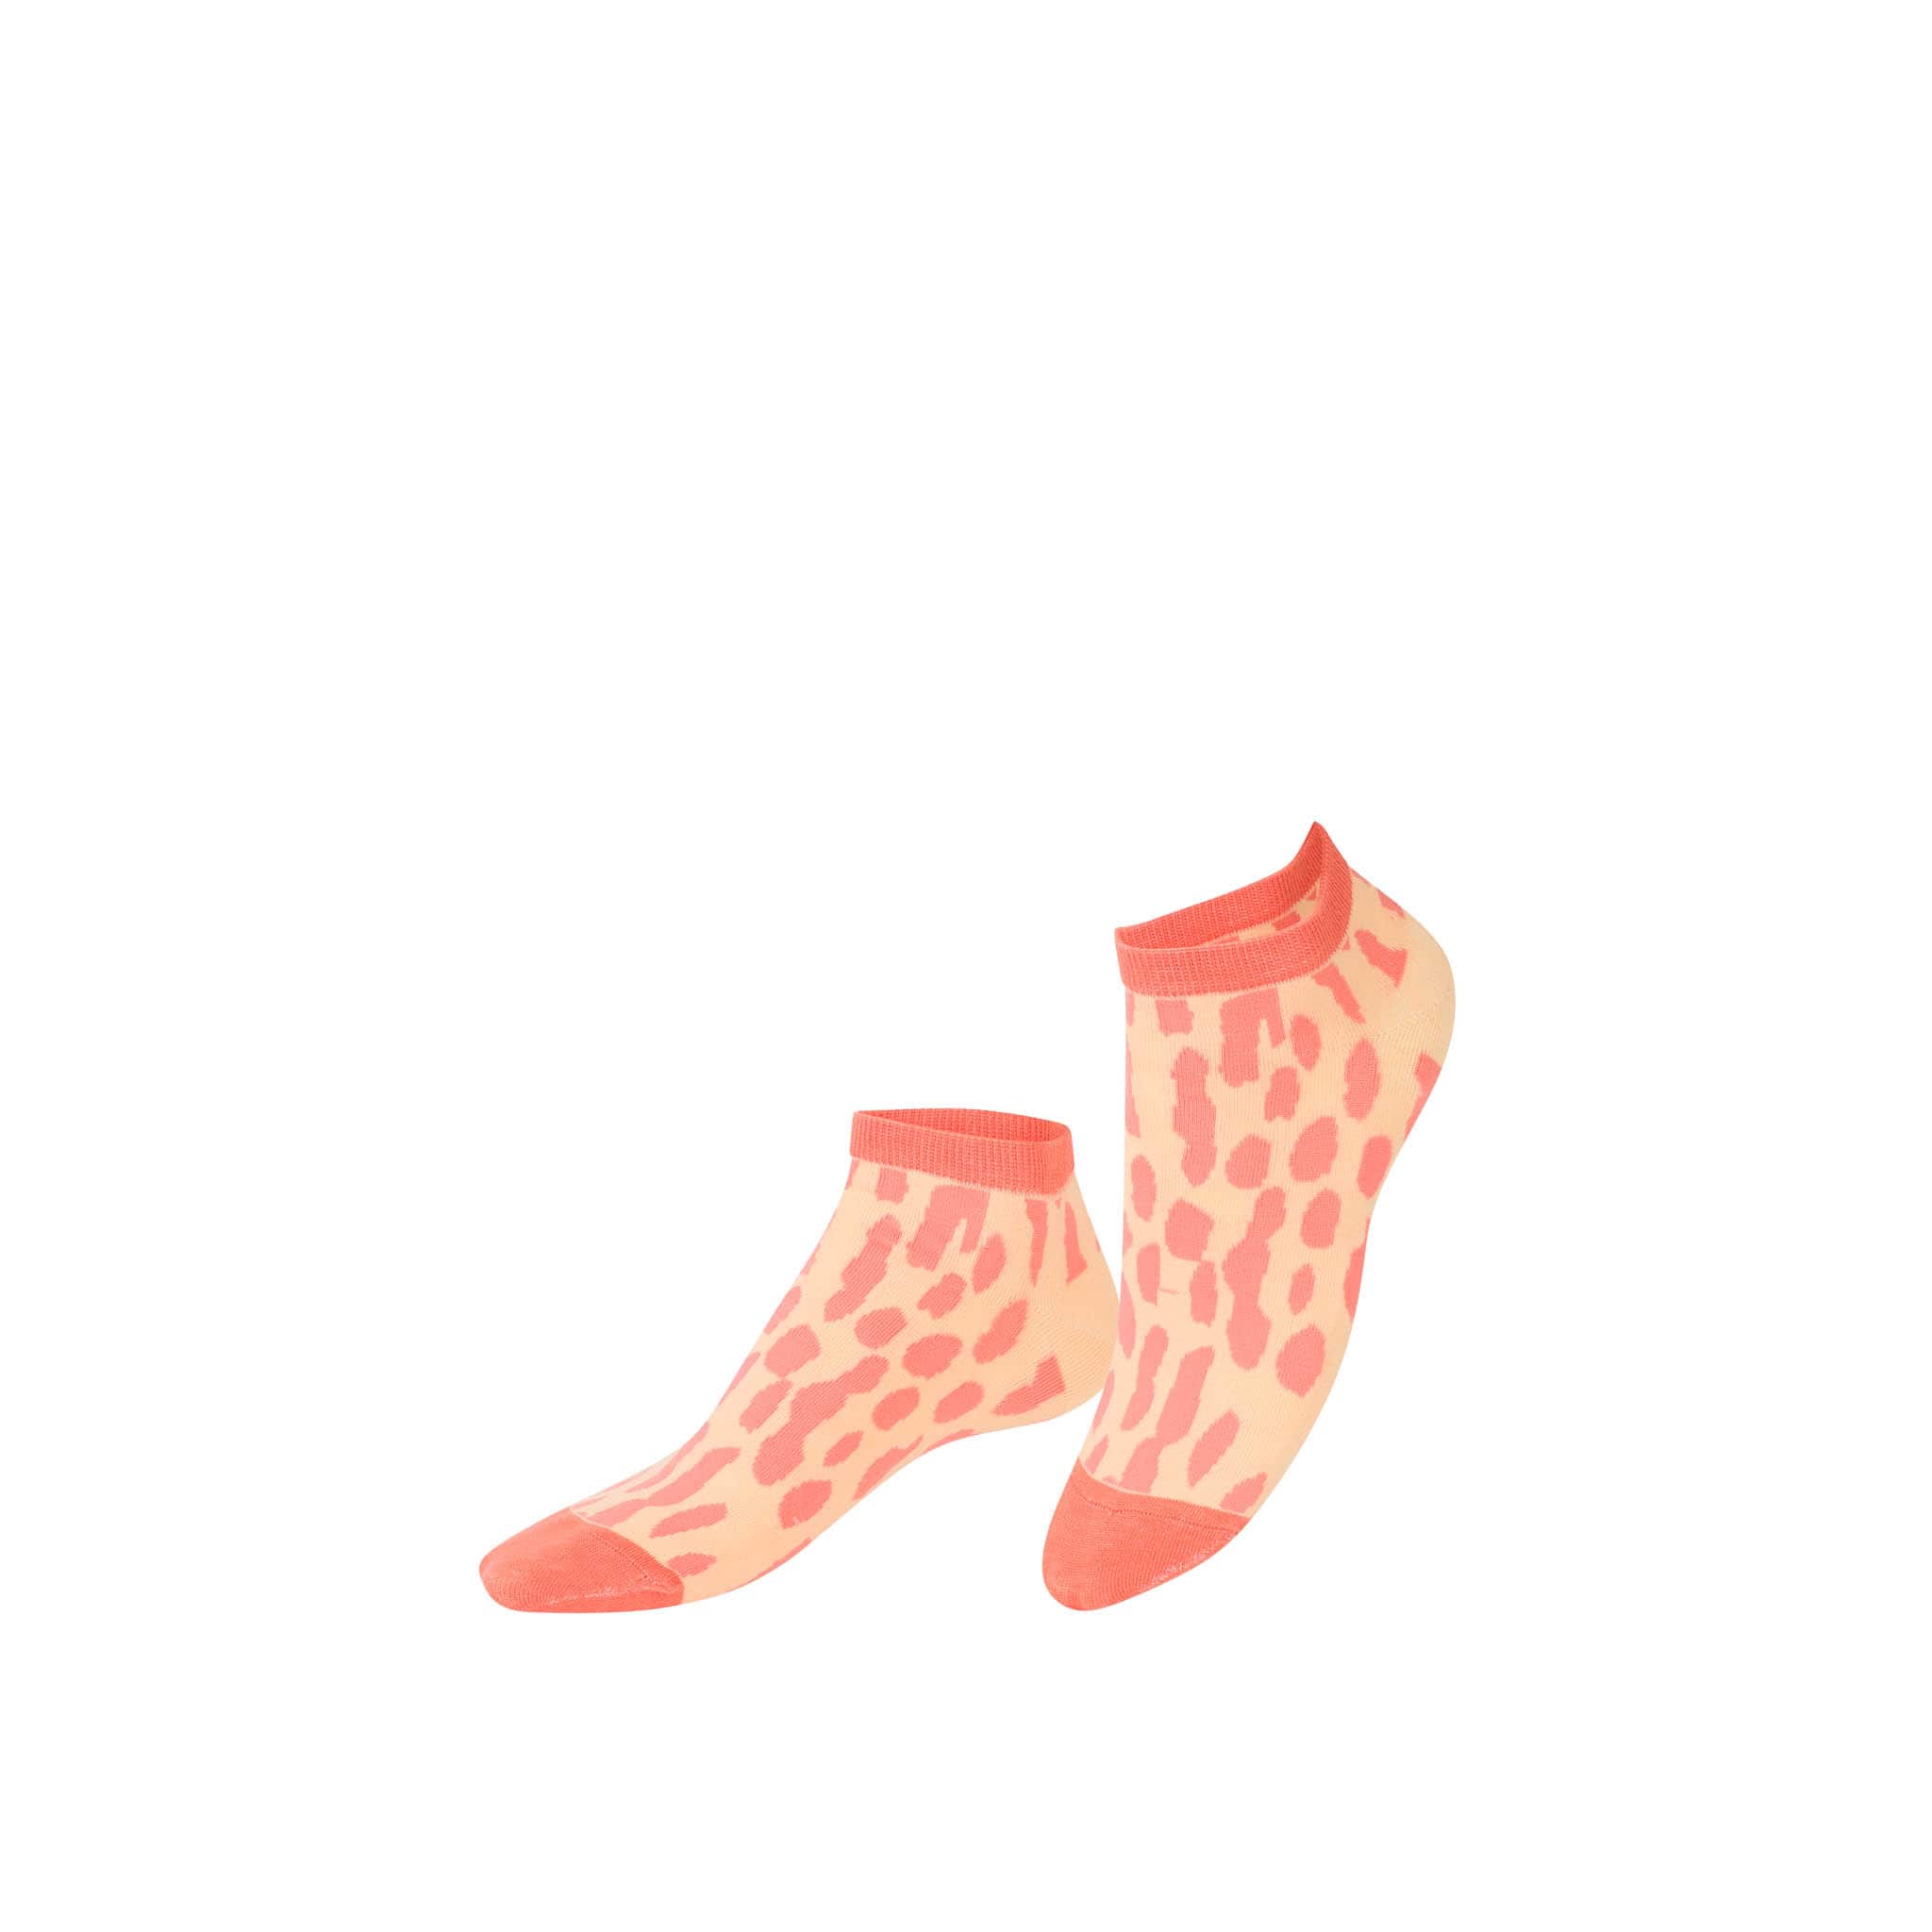 Mango Mochi Socks, 2 Pairs